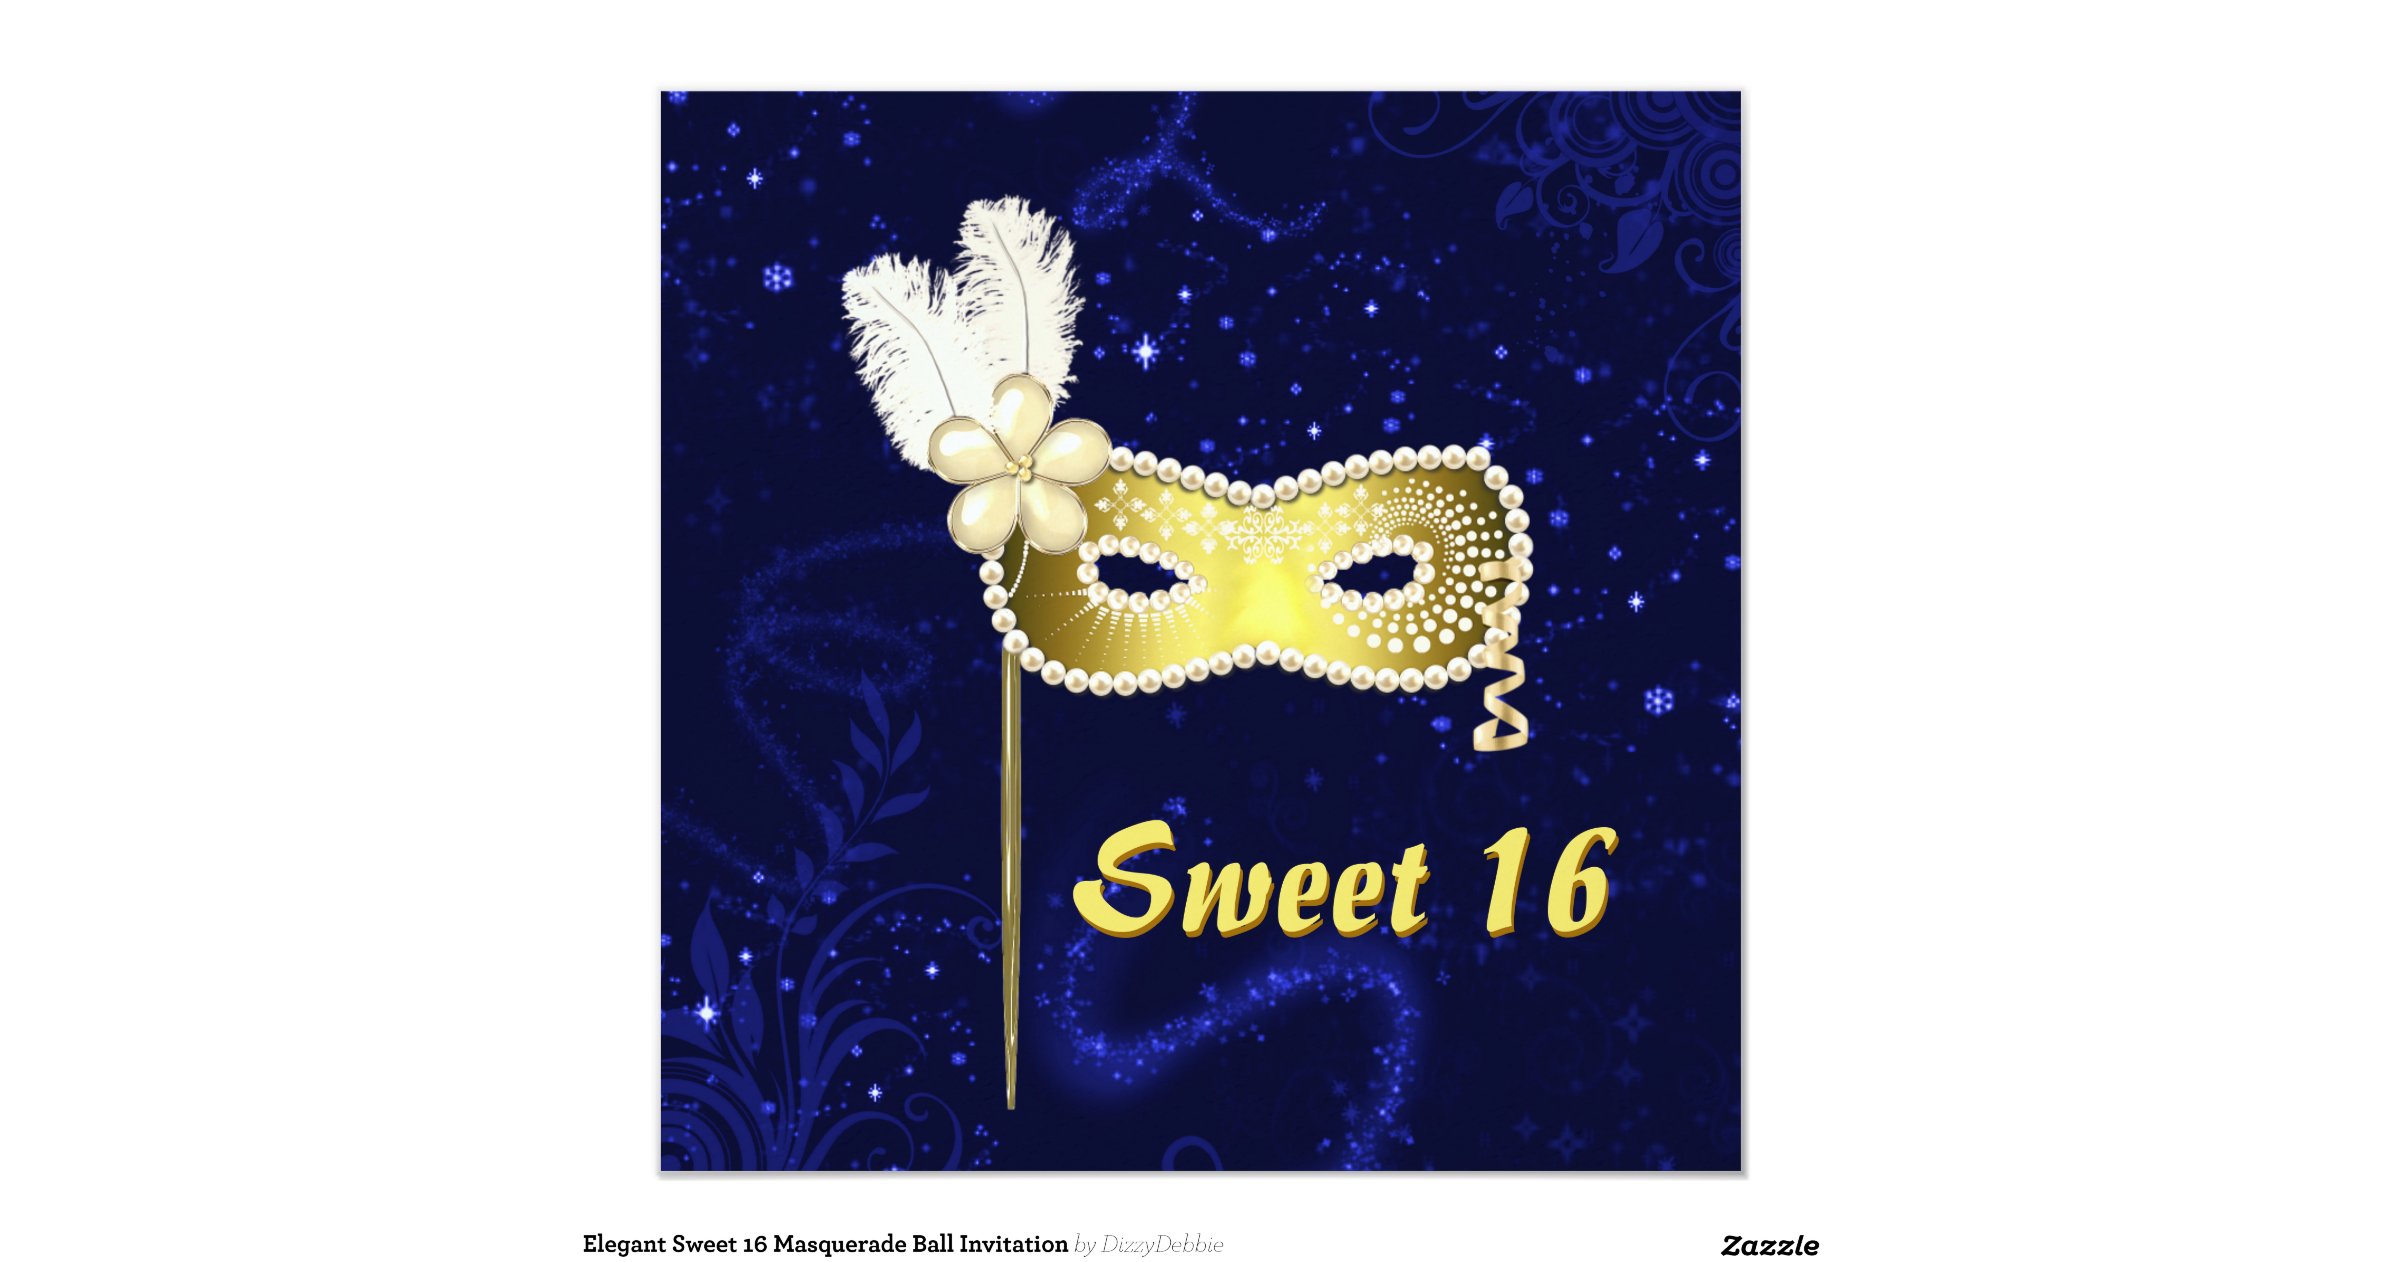 Elegant Sweet 16 Masquerade Ball Invitation